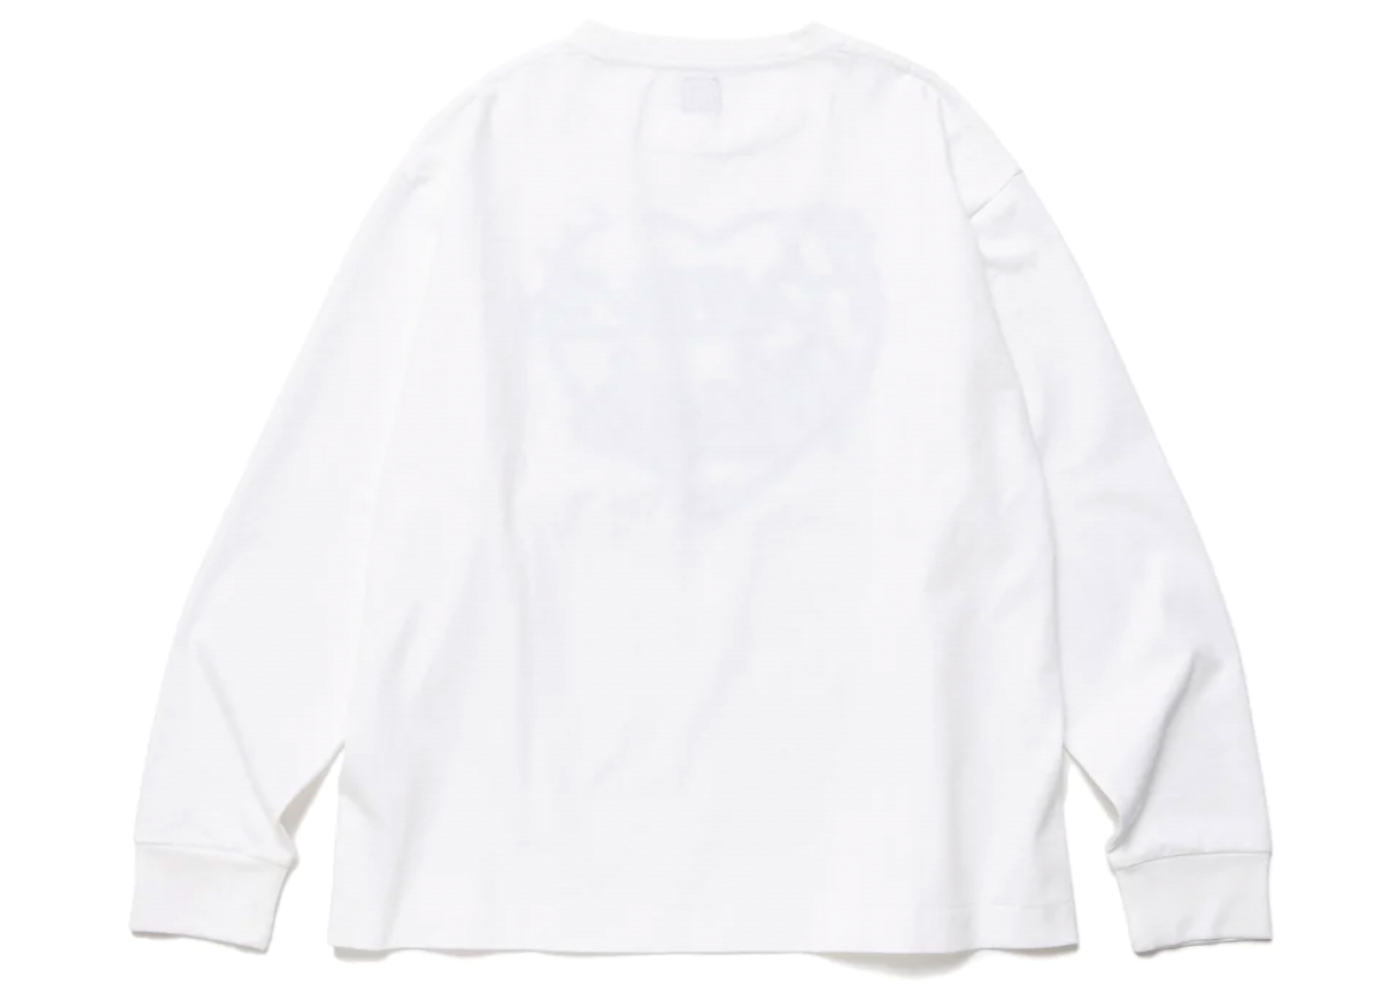 Human Made Heart L/S T-Shirt White